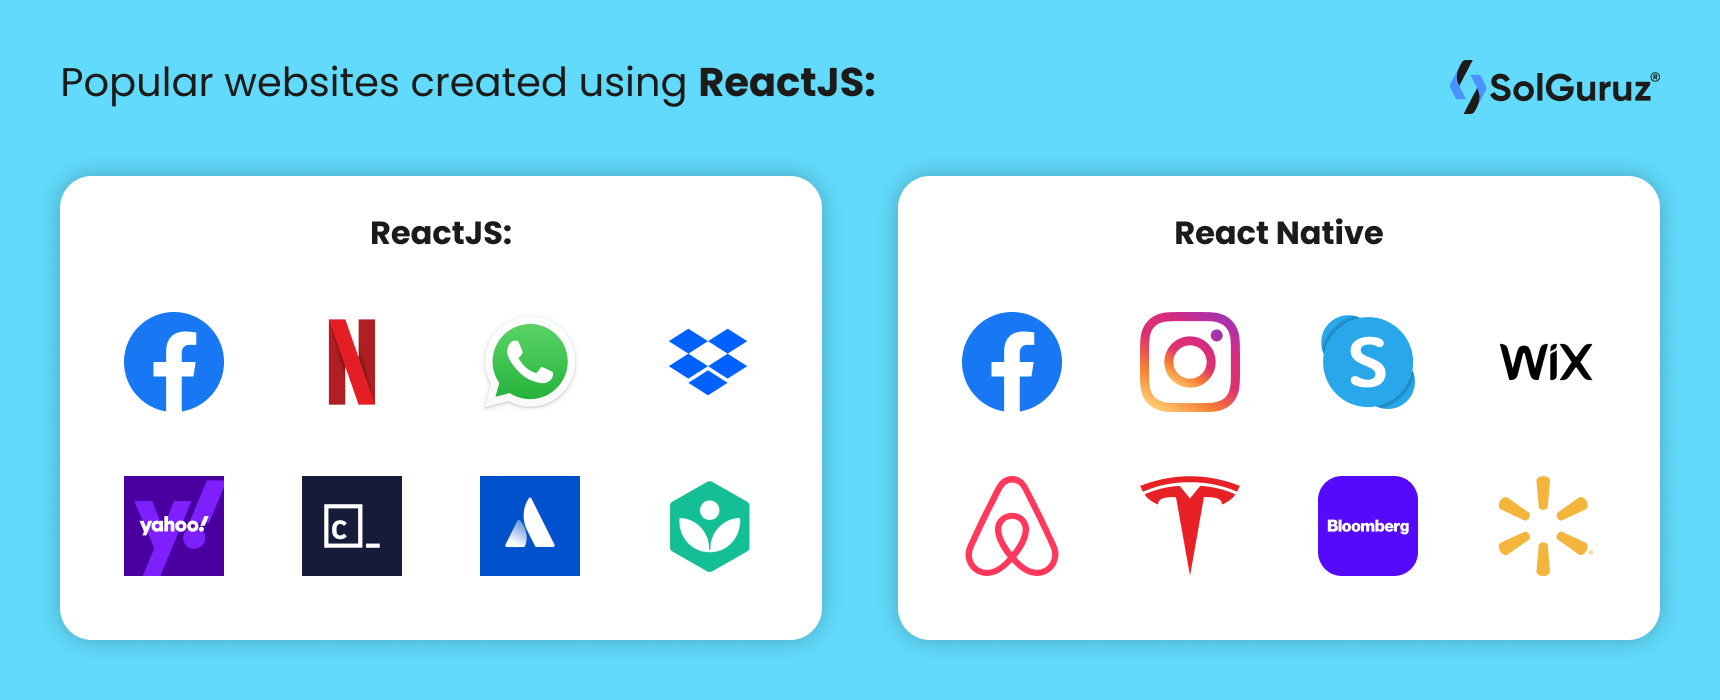 Popular websites created using ReactJs